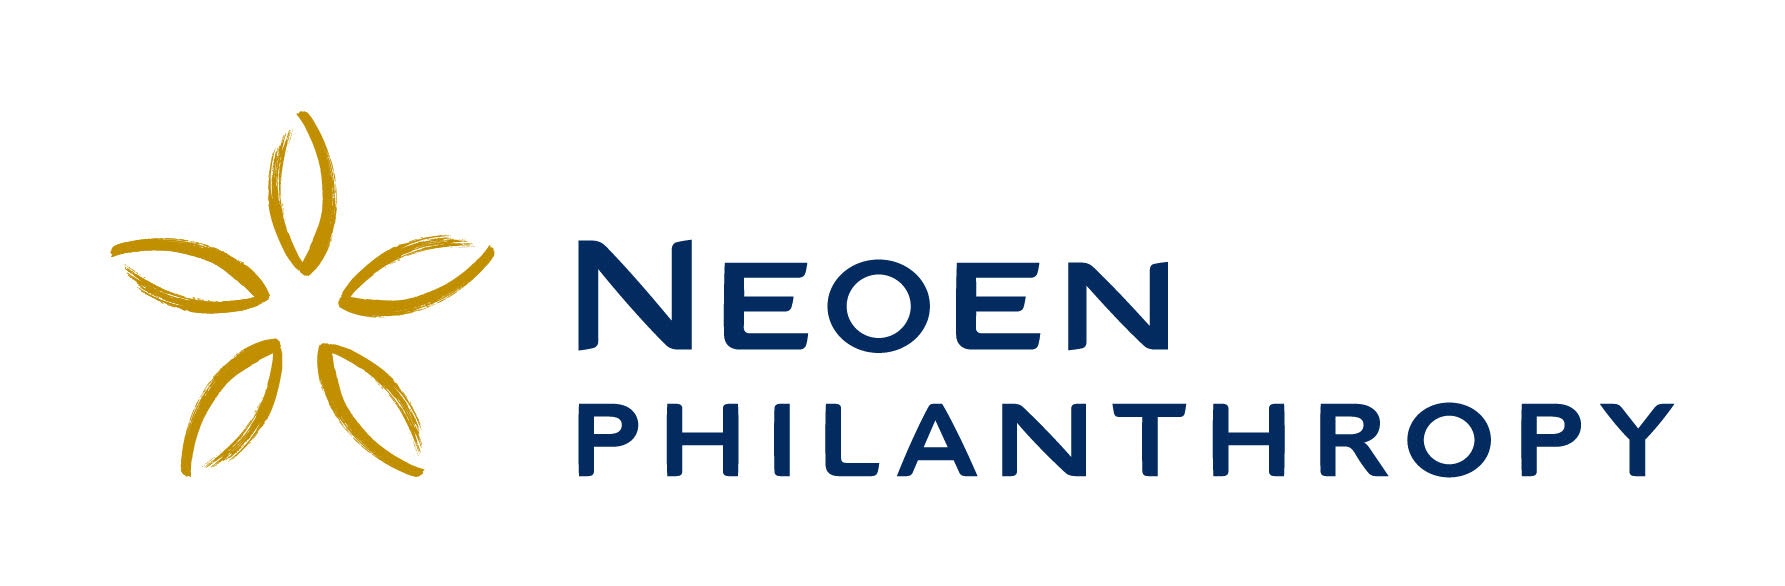 Neonen philanthropy